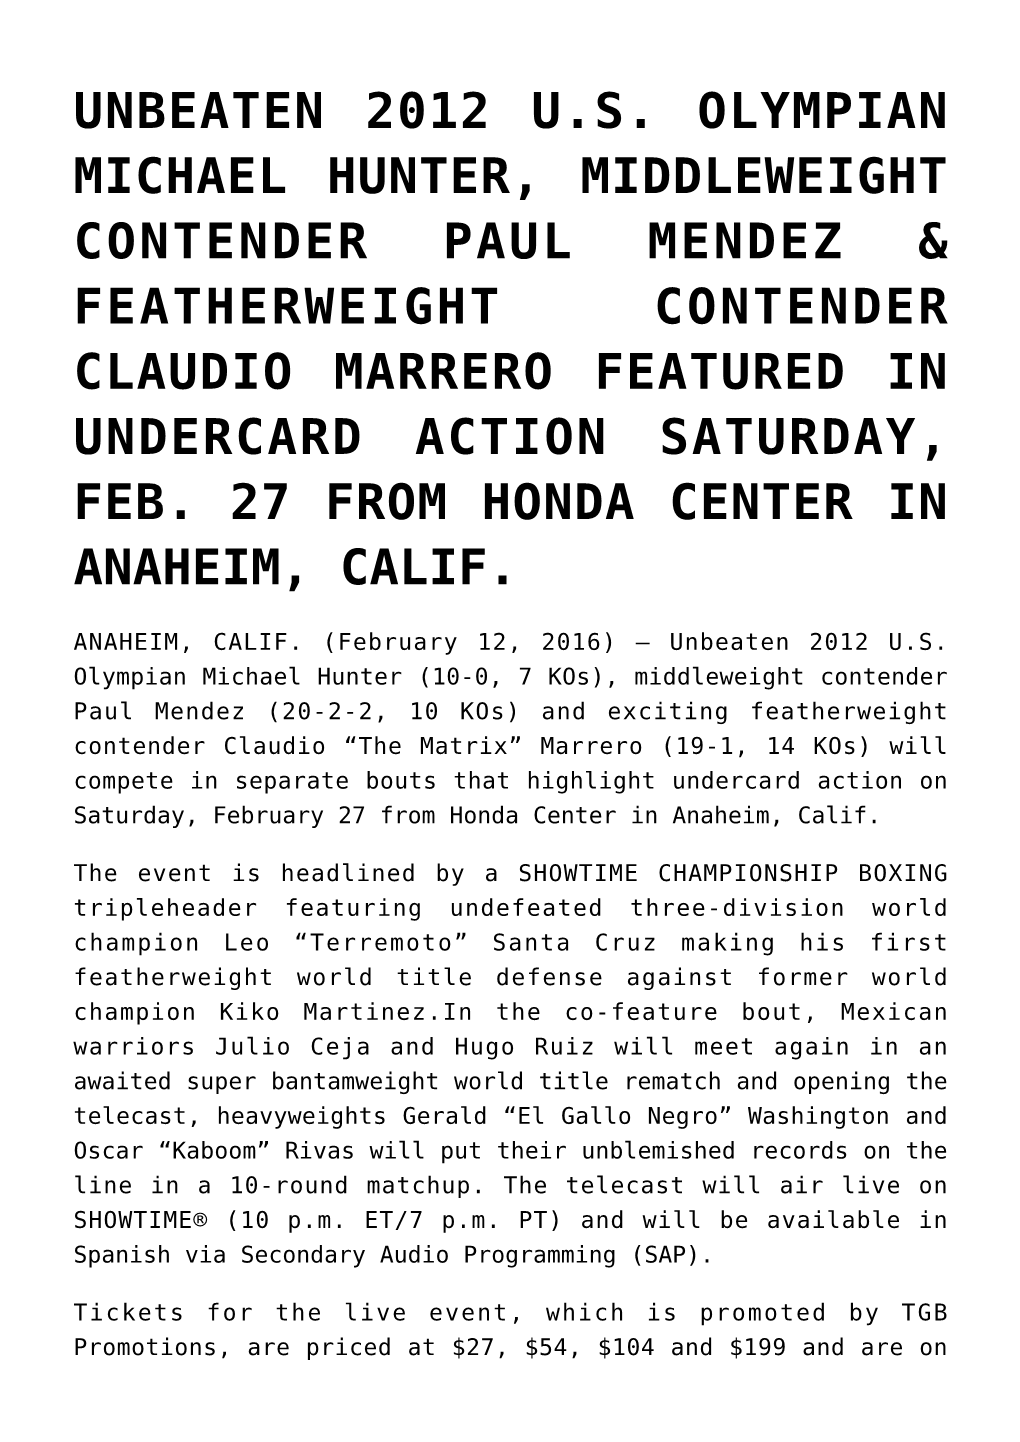 Unbeaten 2012 U.S. Olympian Michael Hunter, Middleweight Contender Paul Mendez & Featherweight Contender Claudio Marrero Featured in Undercard Action Saturday, Feb